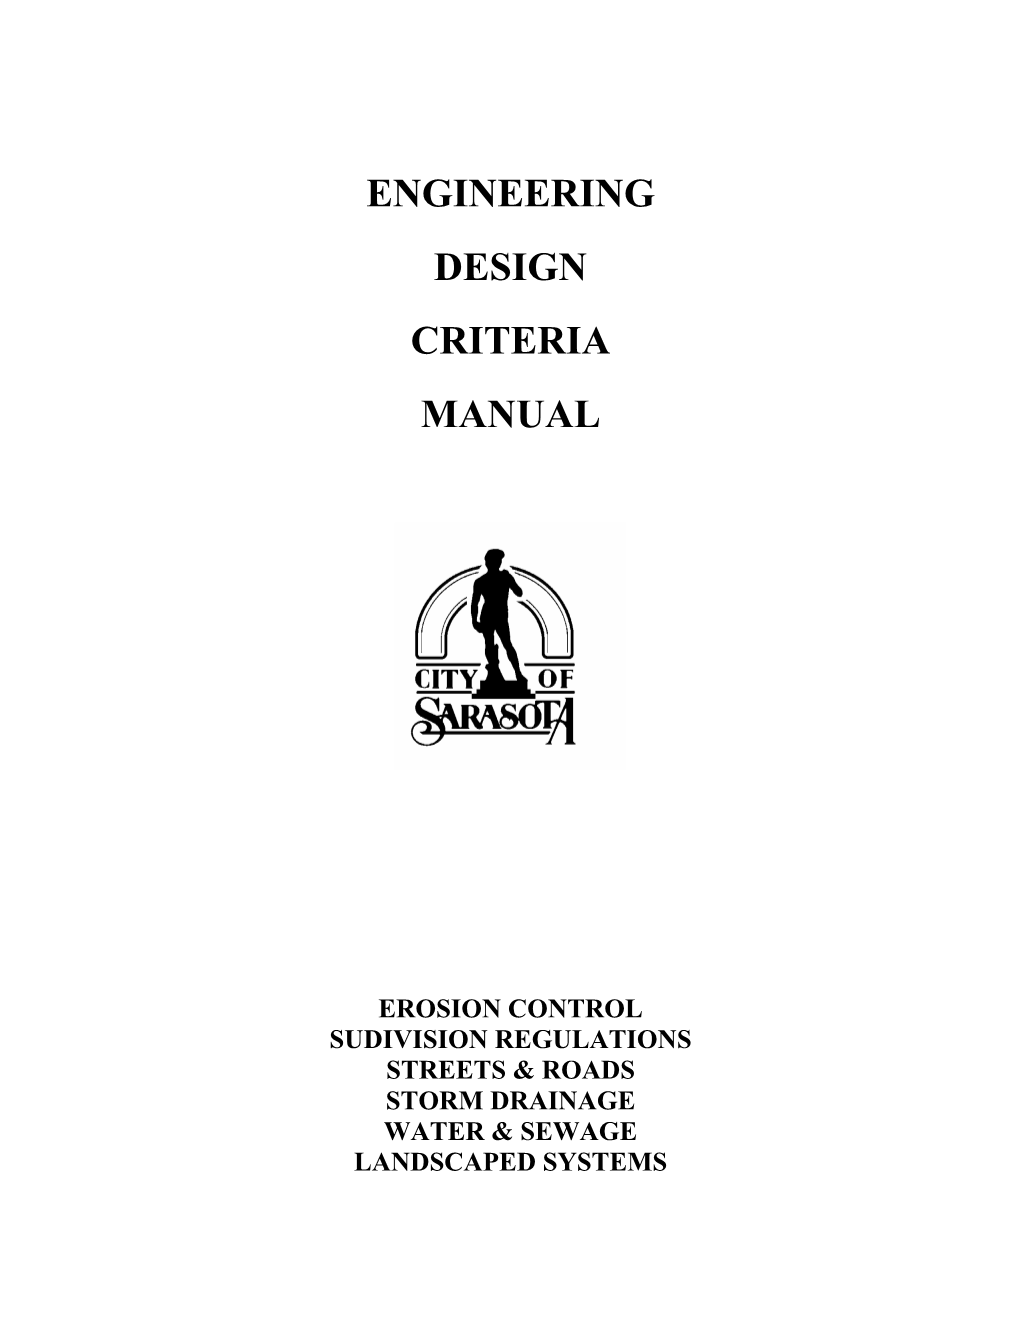 Engineering Design Criteria Manual March 2002